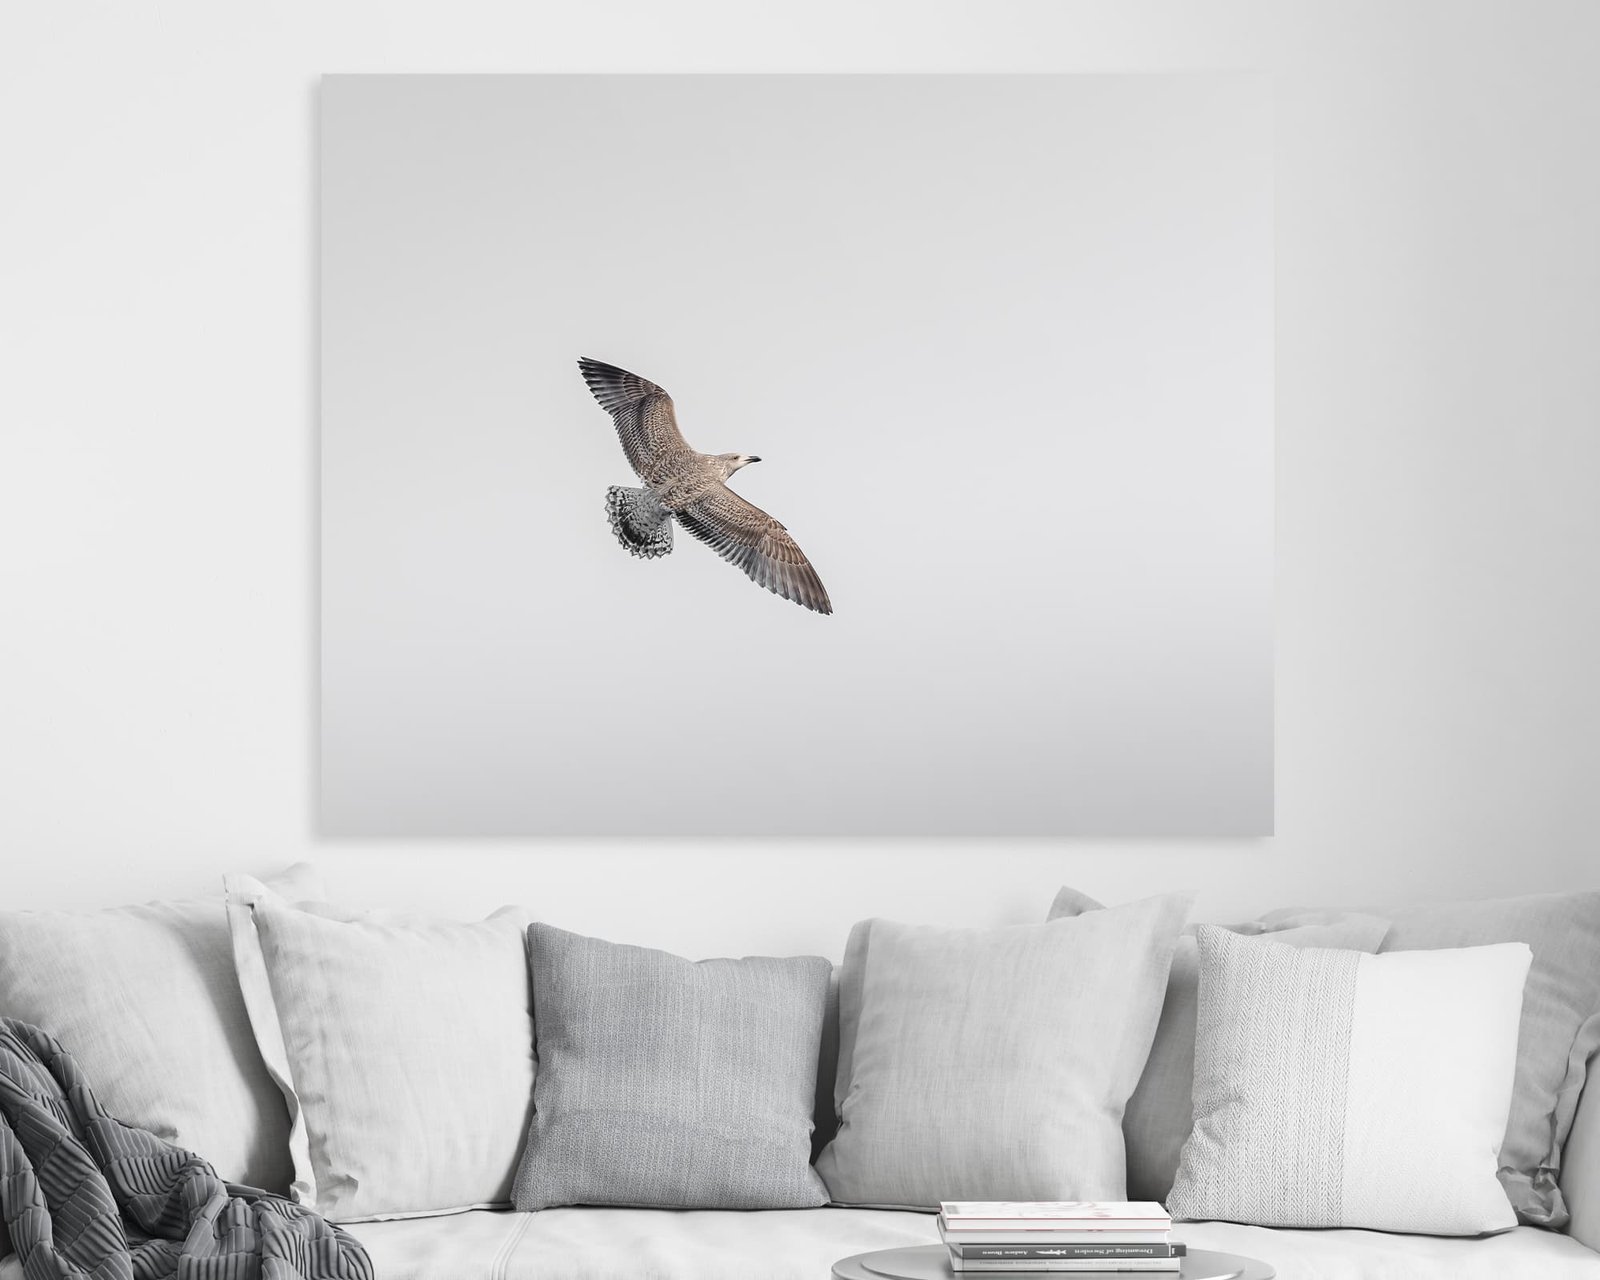 Flying bird on a minimalist wall art